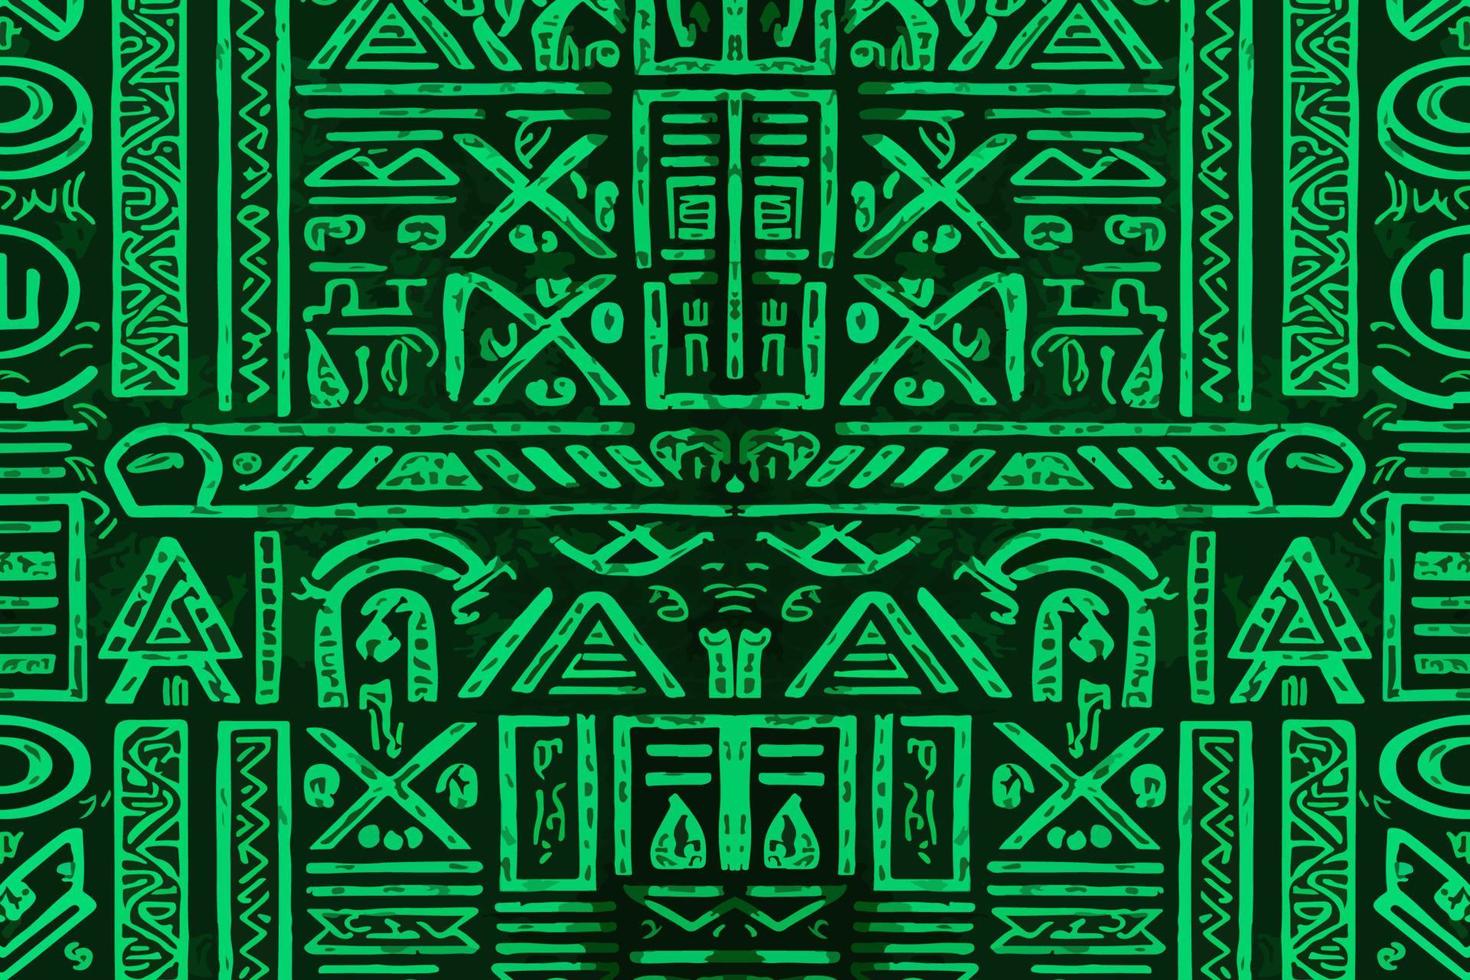 egyptisk hieroglyfer etnisk mönster grön bakgrund. abstrakt traditionell folk antik stam- sicksack- grafisk linje. textur textil- tyg egyptisk vektor utsmyckad elegant lyx årgång retro stil.